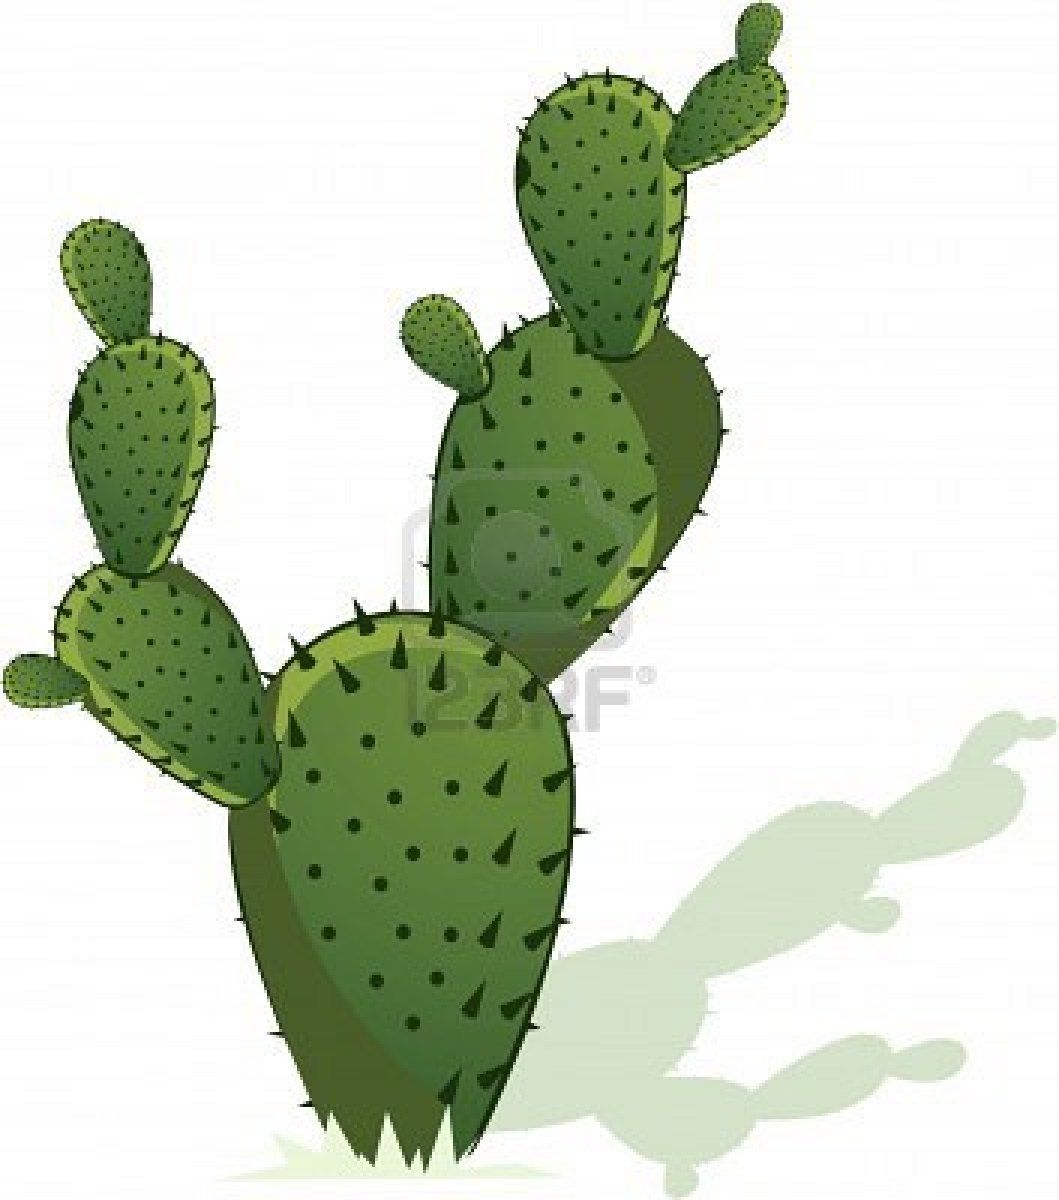 Cactus signs bing.